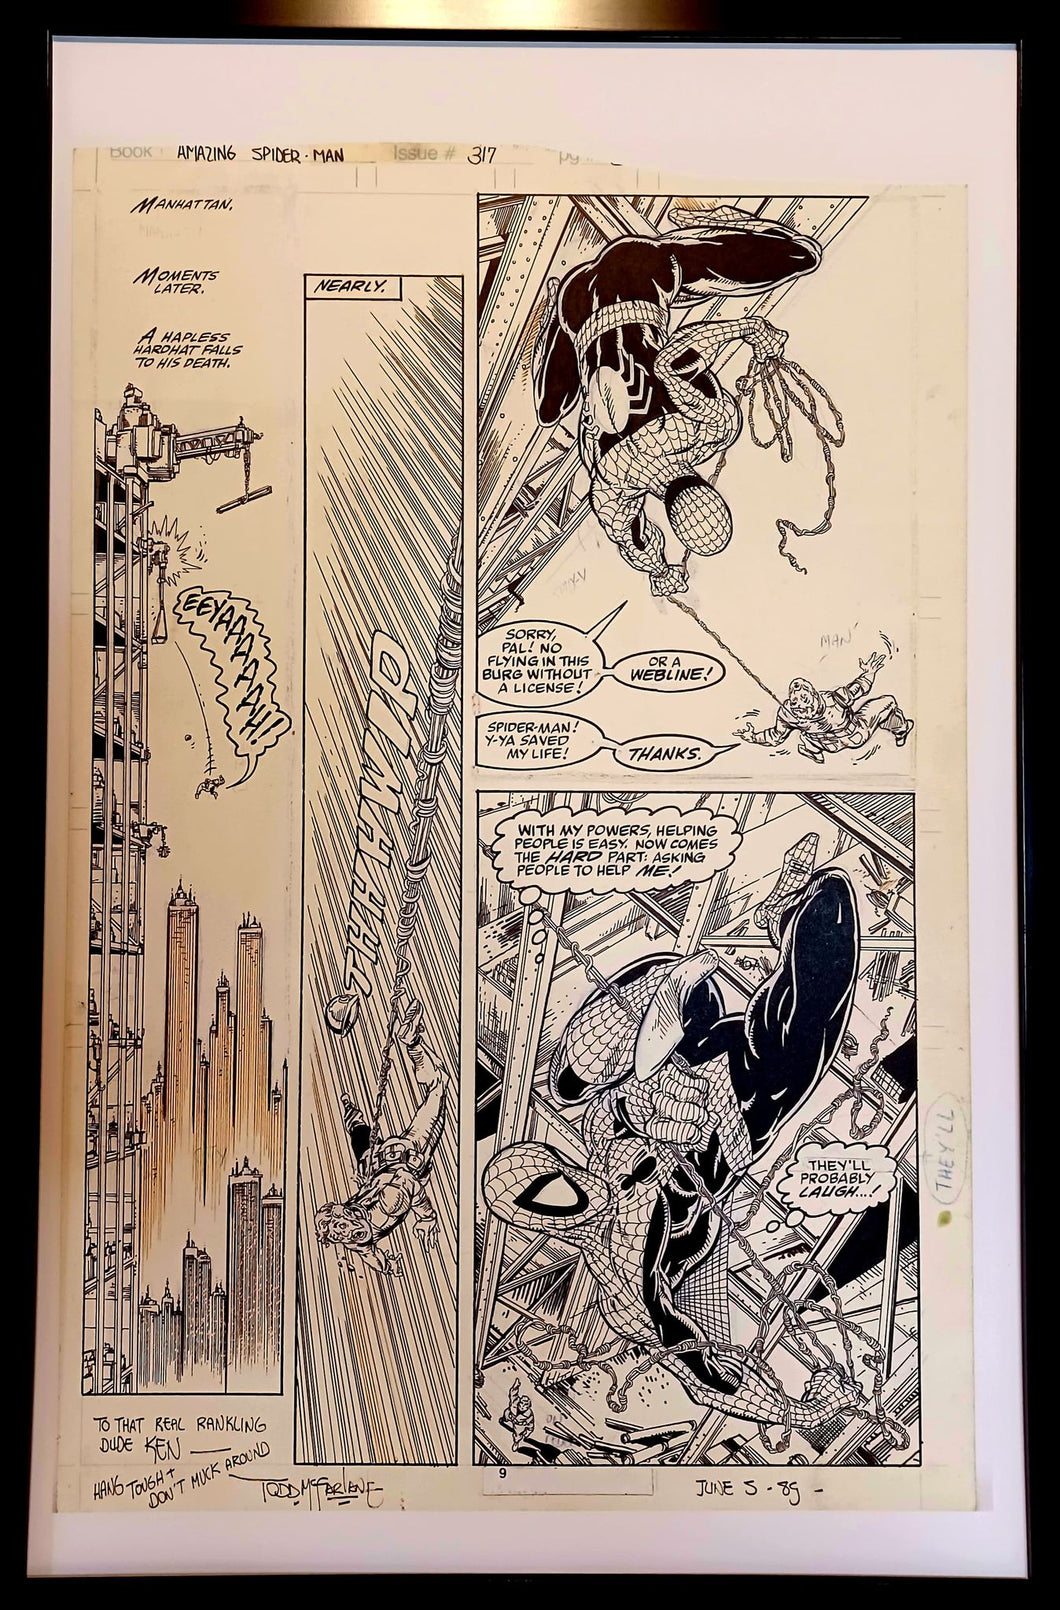 Amazing Spider-Man #317 pg. 7 by Todd McFarlane 11x17 FRAMED Original Art Print Comic Poster